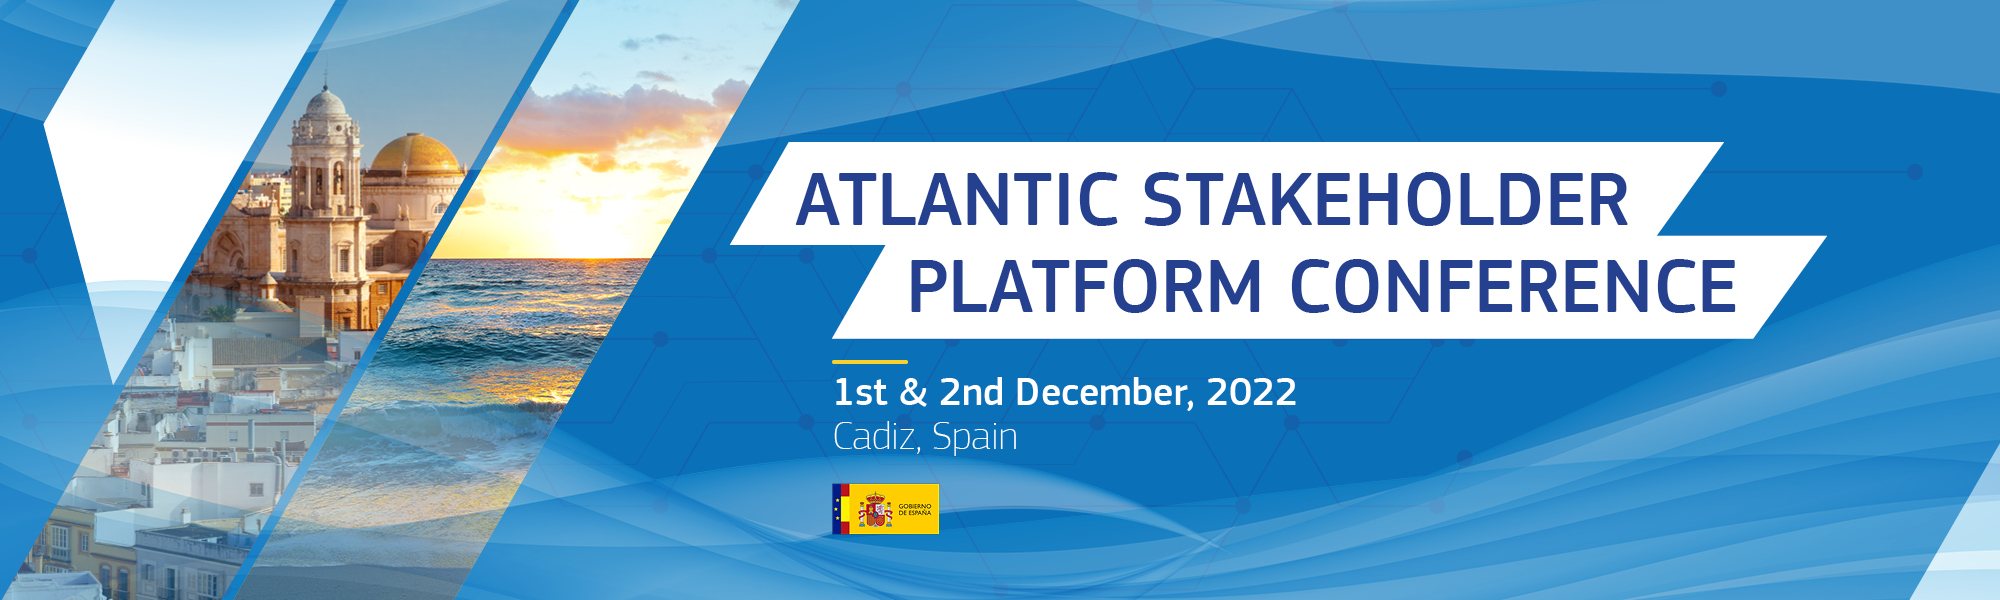 Atlantic Stakeholder Platform Conference 2022 Marine Ireland